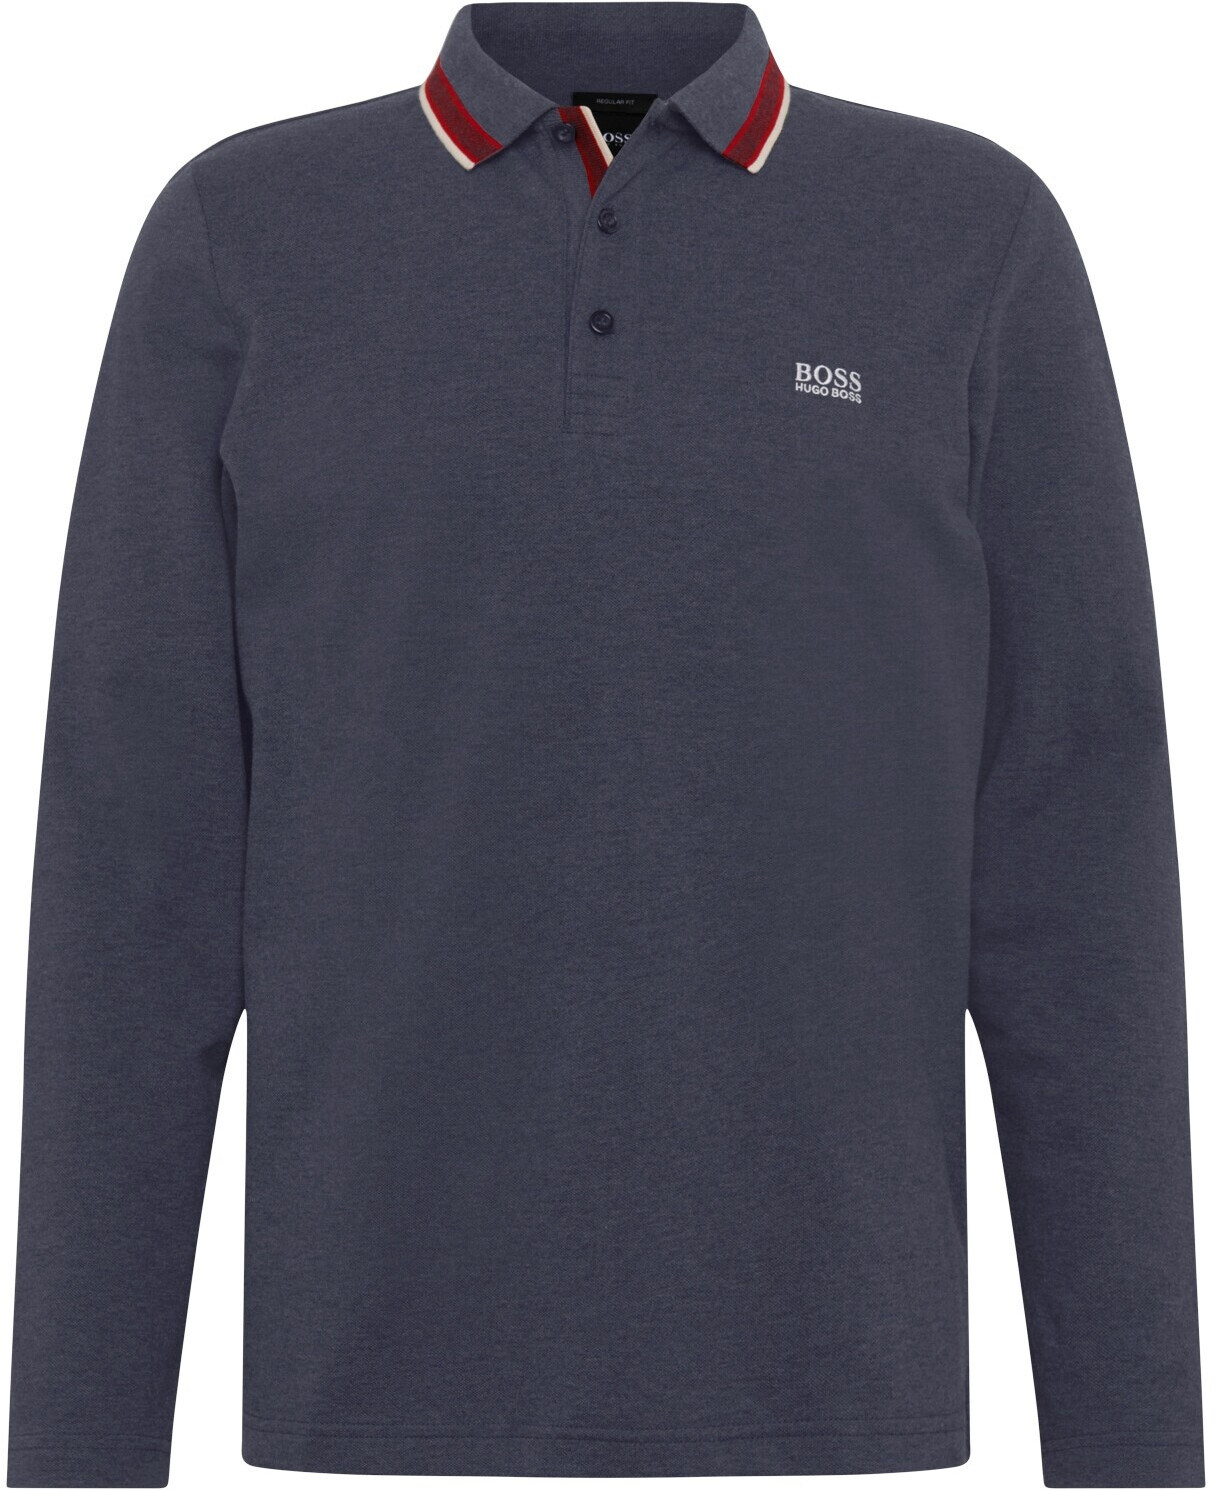 Hugo Boss Dark Blue Regular fit polo Shirt in cotton piqué style Plisy 50272945